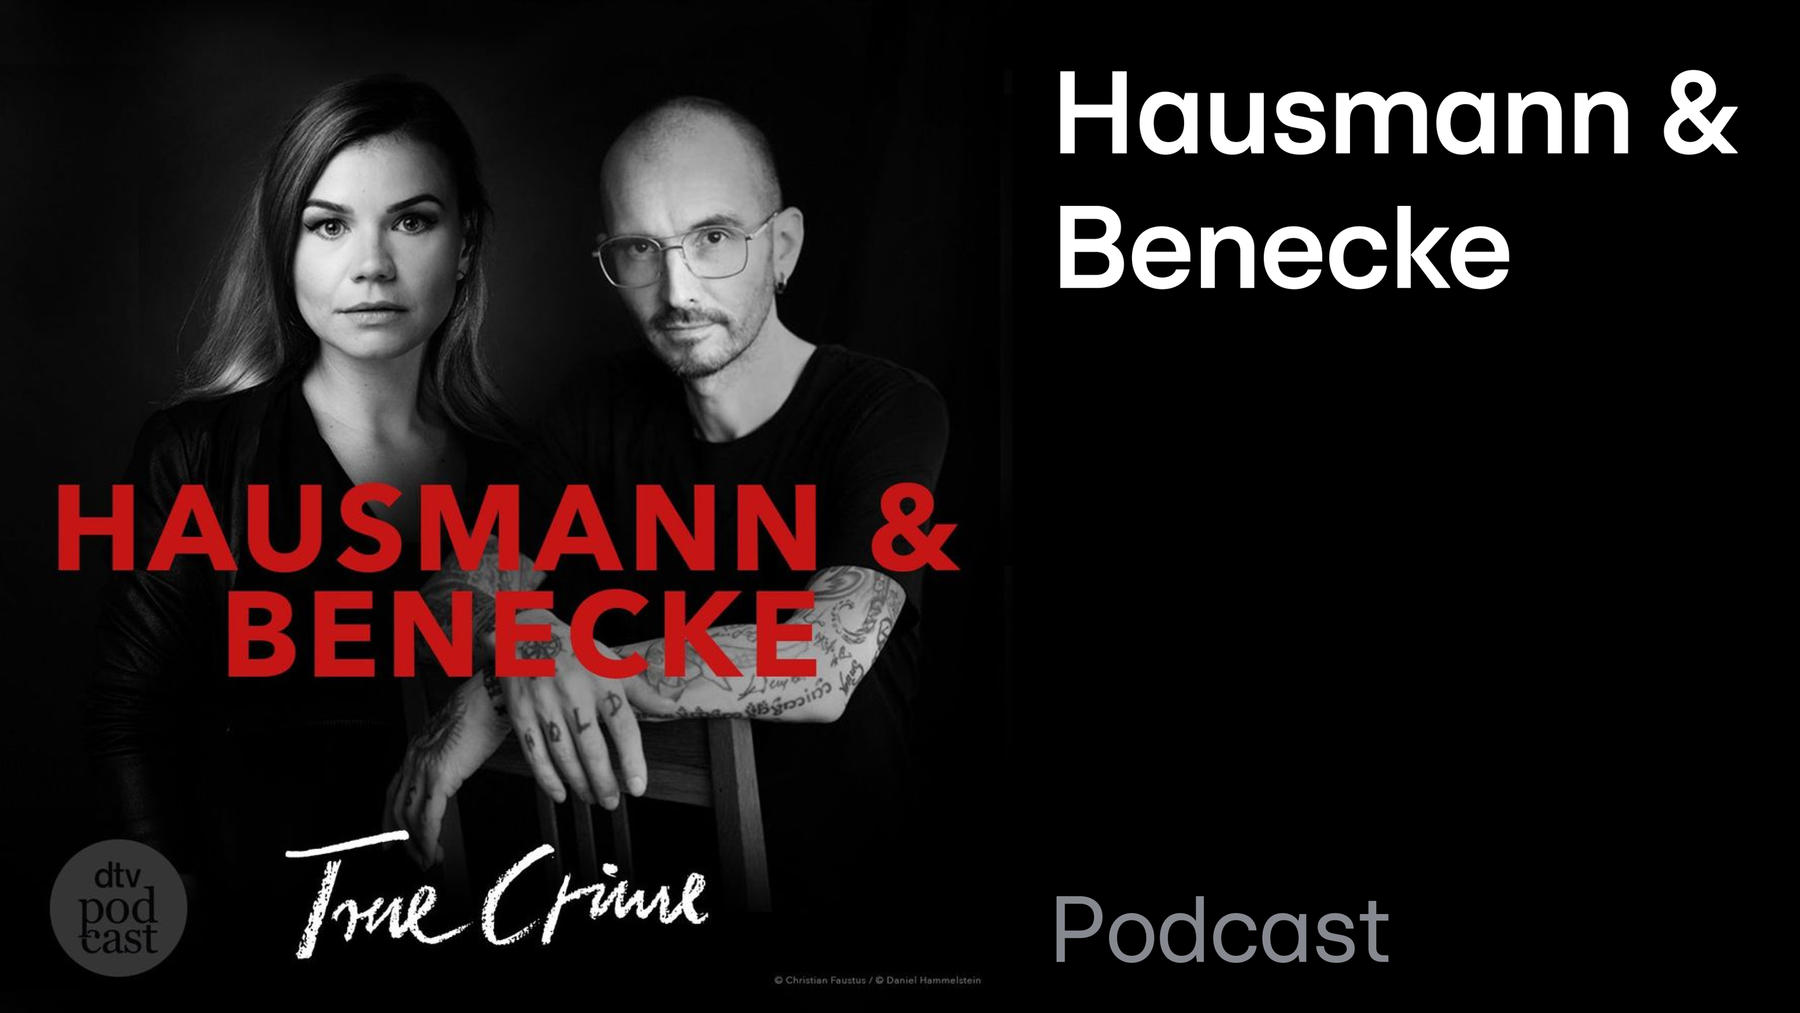 Podcast: Hausmann & Benecke